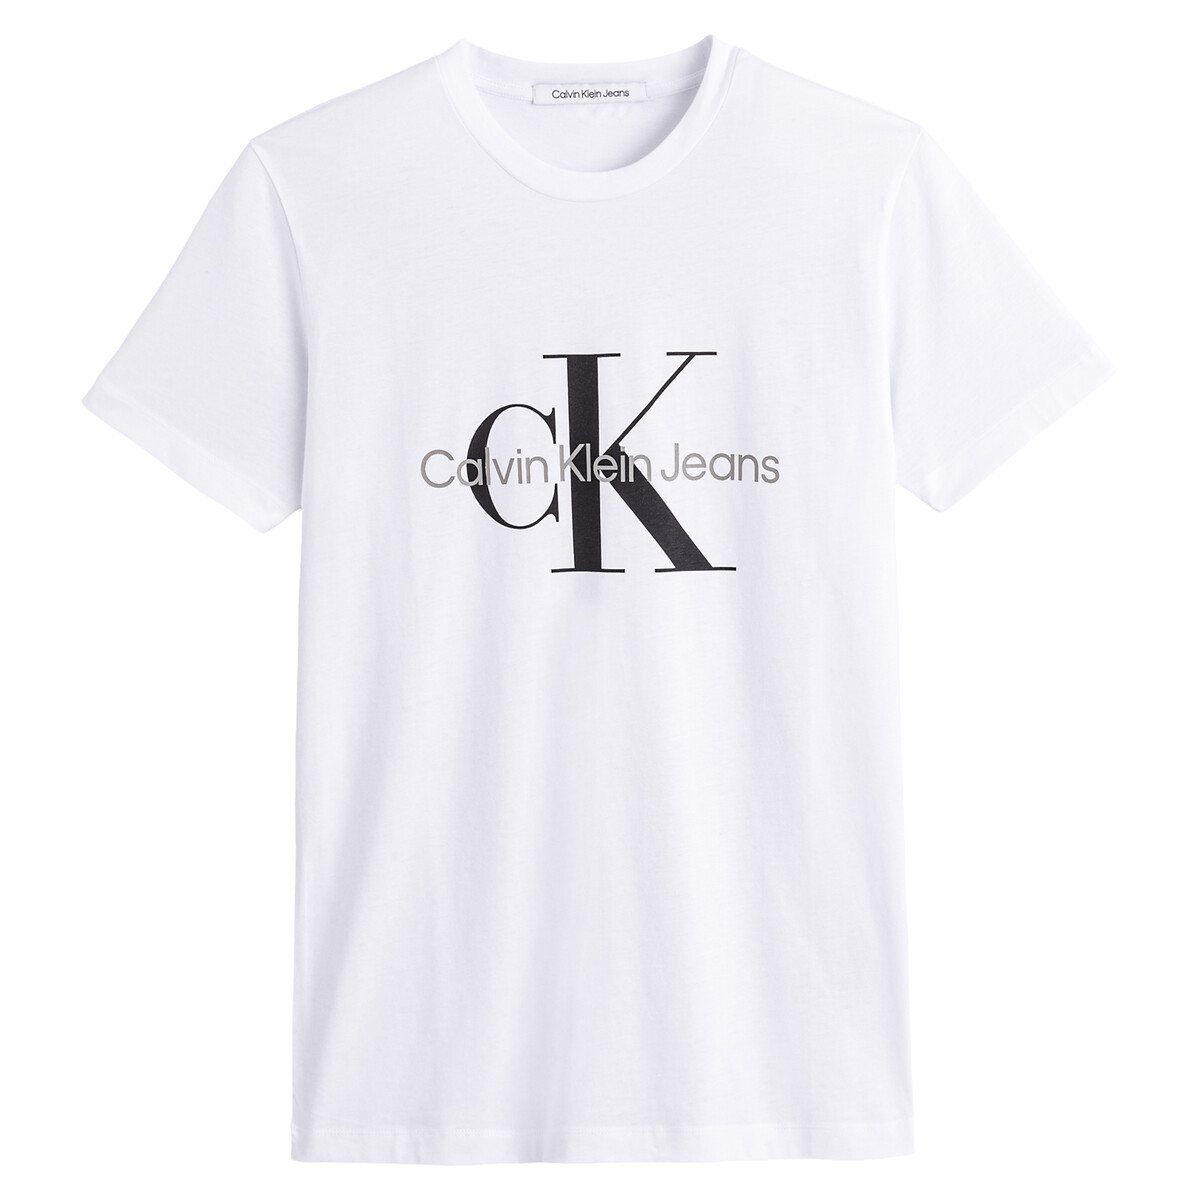 T-shirt com gola redonda, core monogram Calvin Klein Jeans